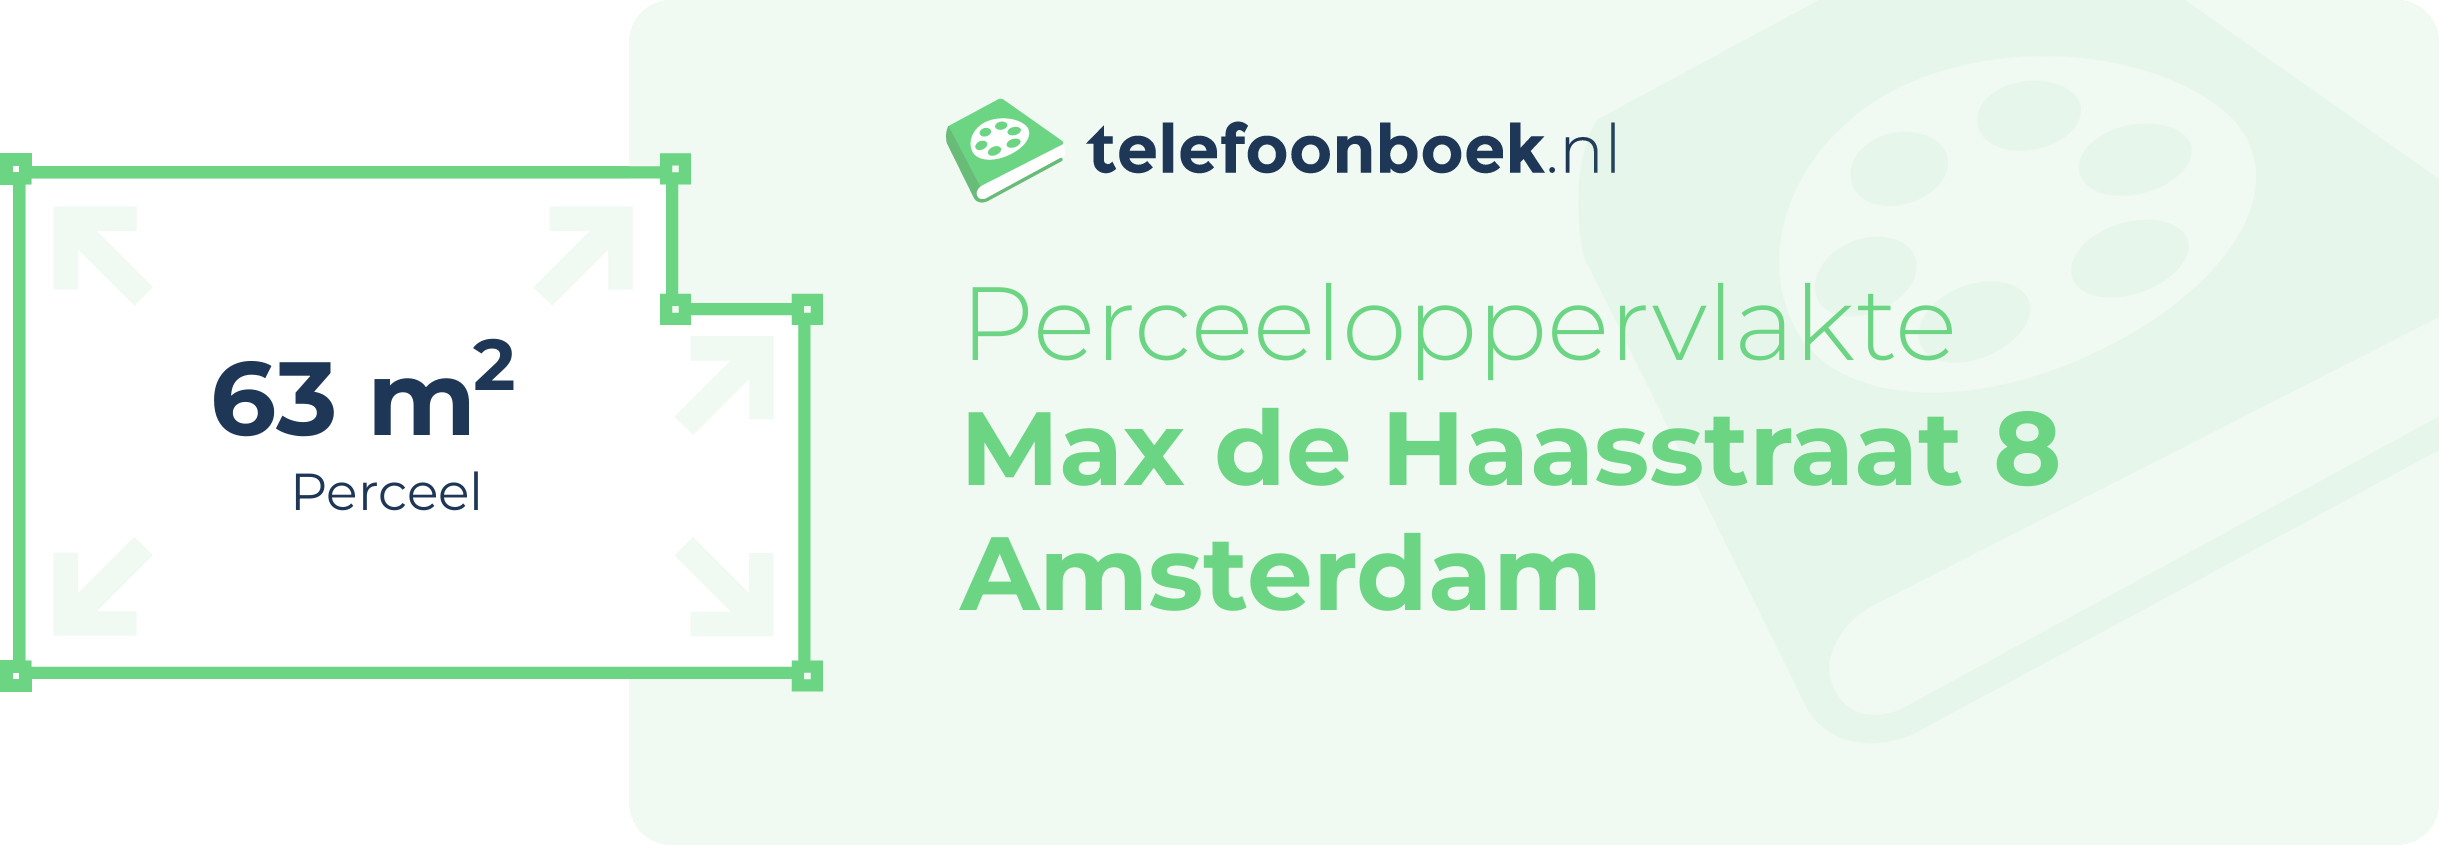 Perceeloppervlakte Max De Haasstraat 8 Amsterdam